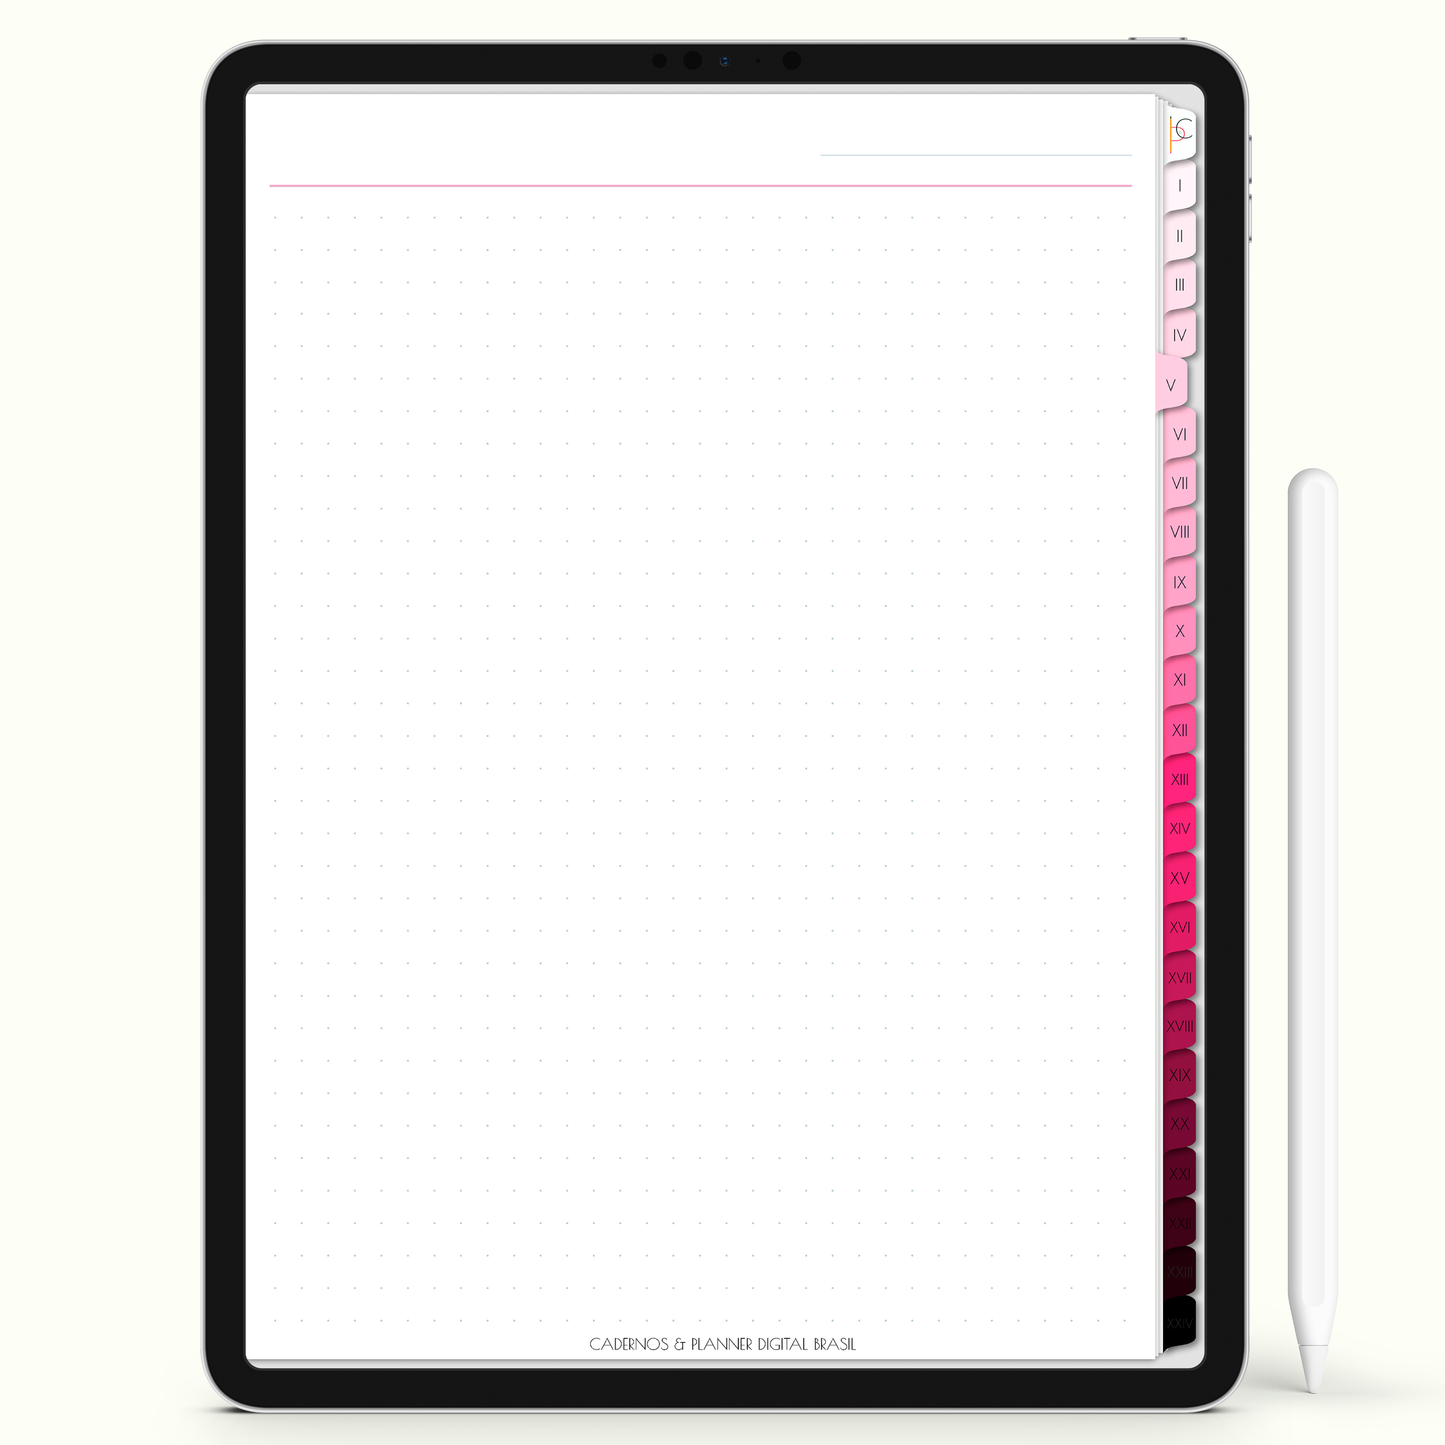 Caderno Digital Blush 24 Matérias - Página Pontilhada do Caderno Digital para iPad e Tablet Android. Cadernos & Planner Digital Brasil